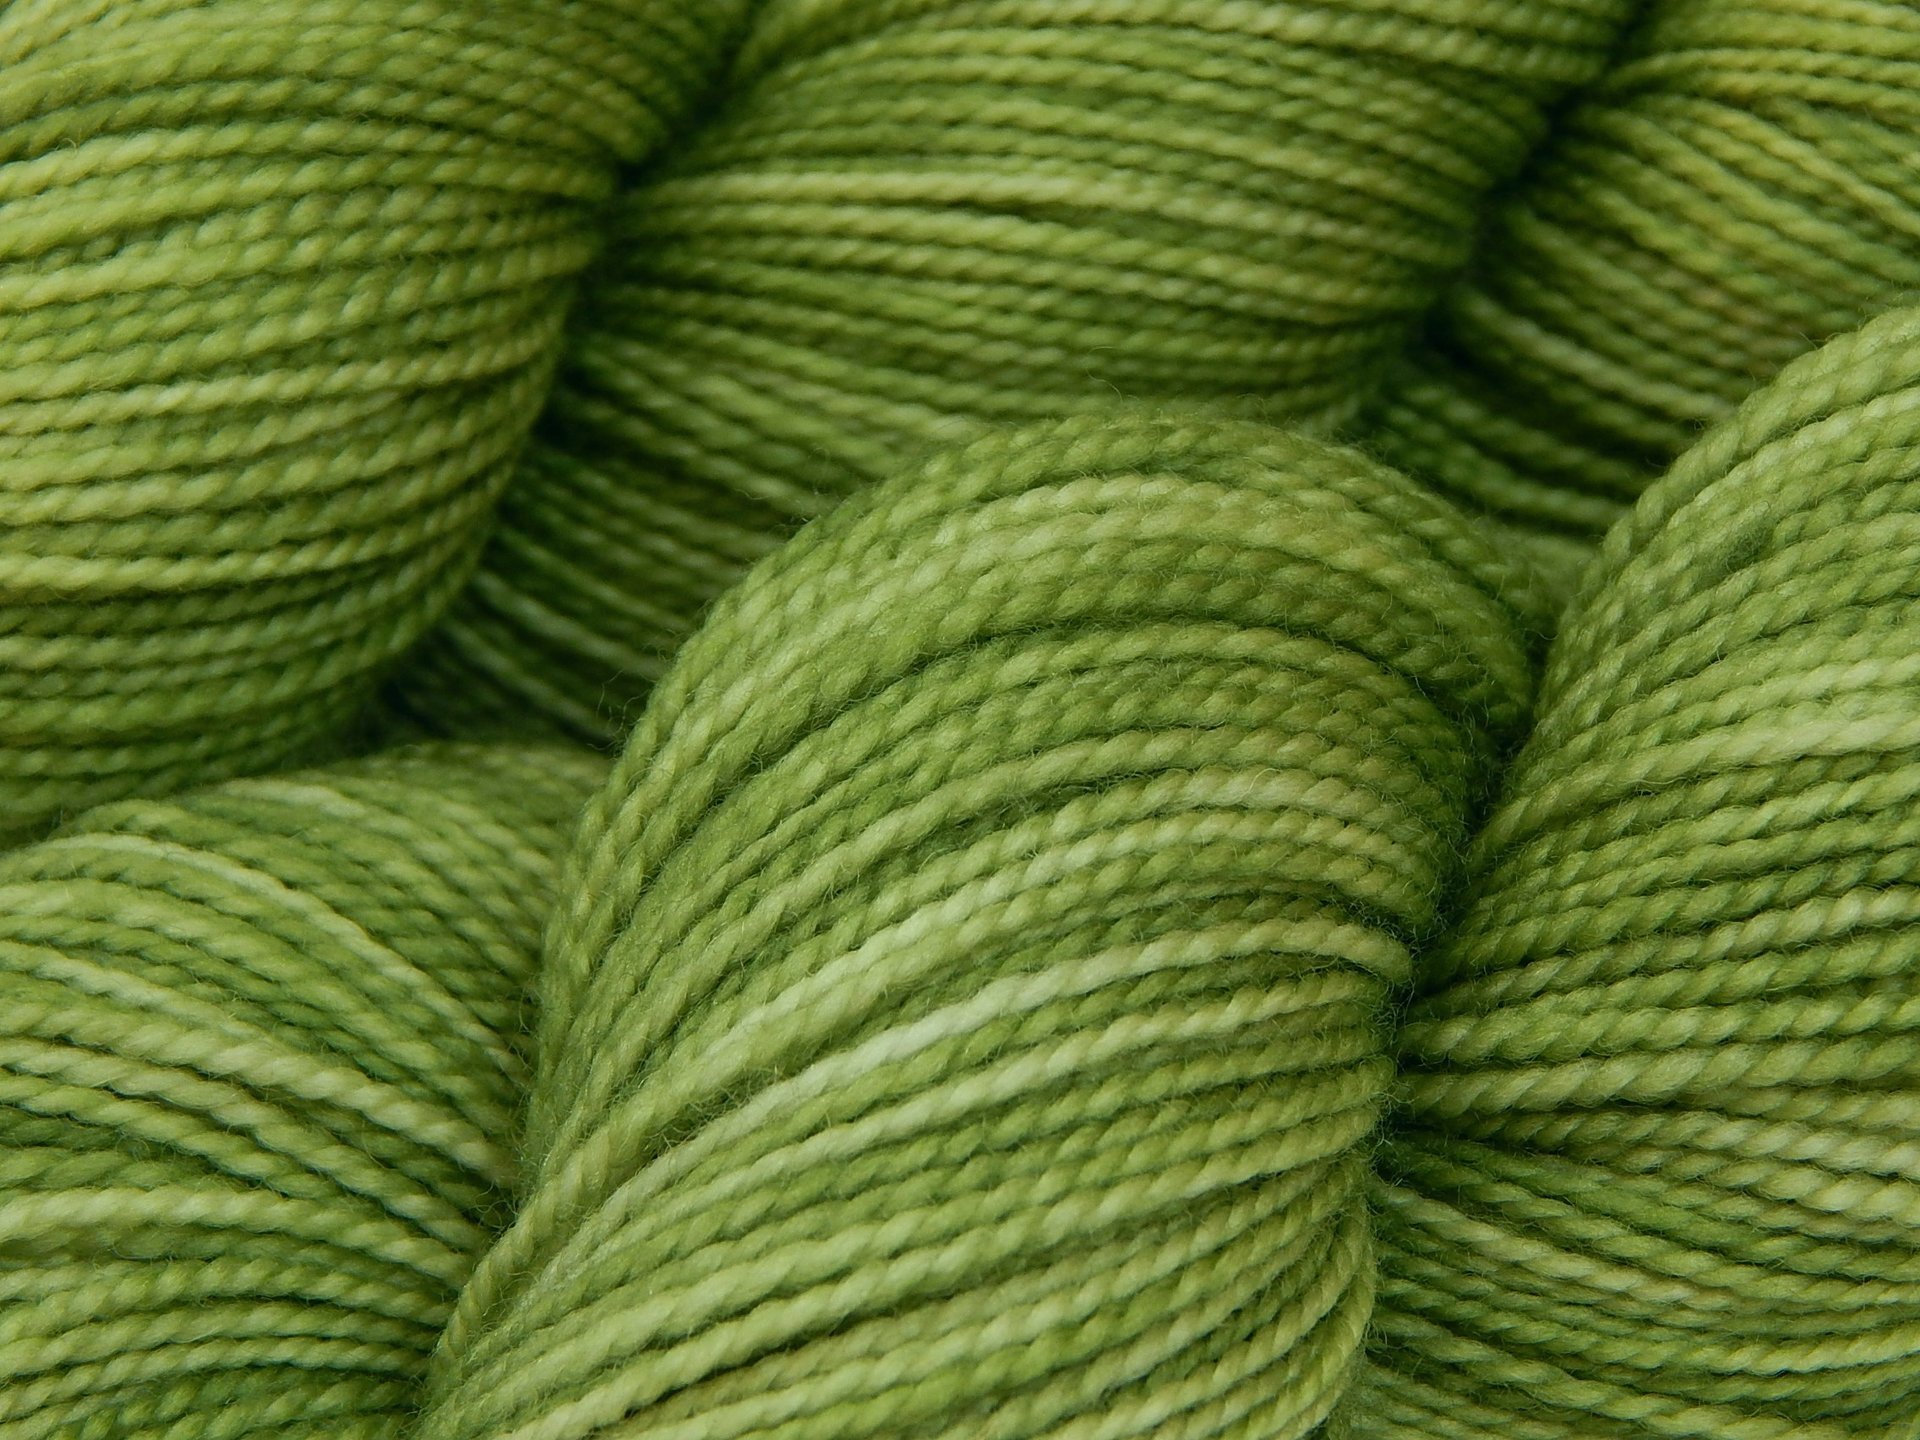 Hand Dyed Yarn, Sock Fingering Weight Superwash 100% Merino Wool - Green Tea - Indie Dyed Yarn, Light Olive Sage Celery Hand Dyed Sock Yarn